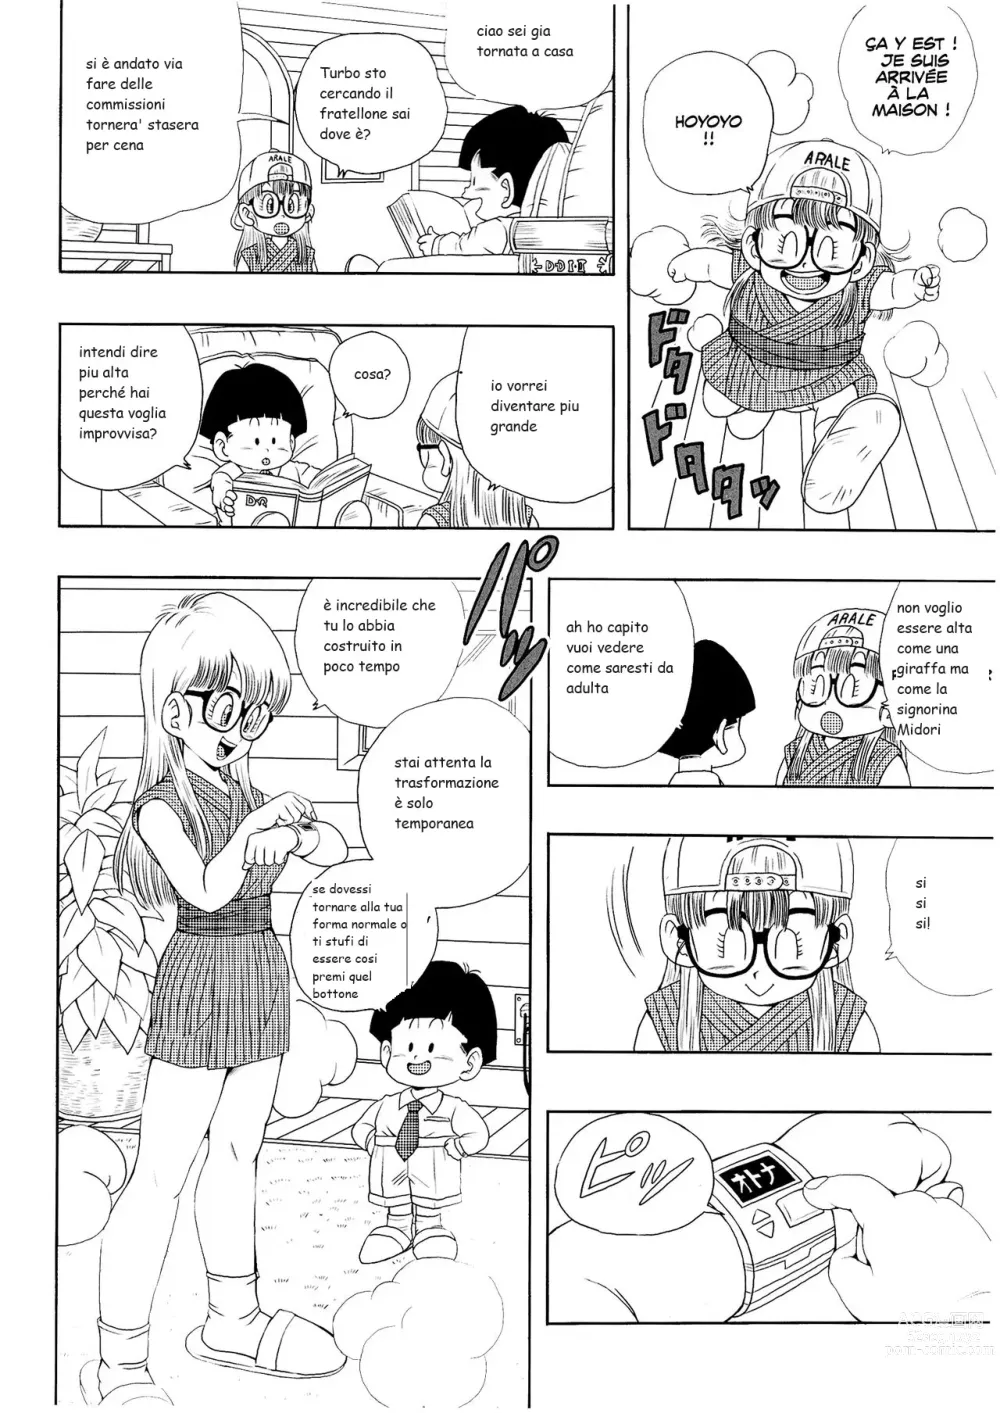 Page 3 of doujinshi la scoperta di arale